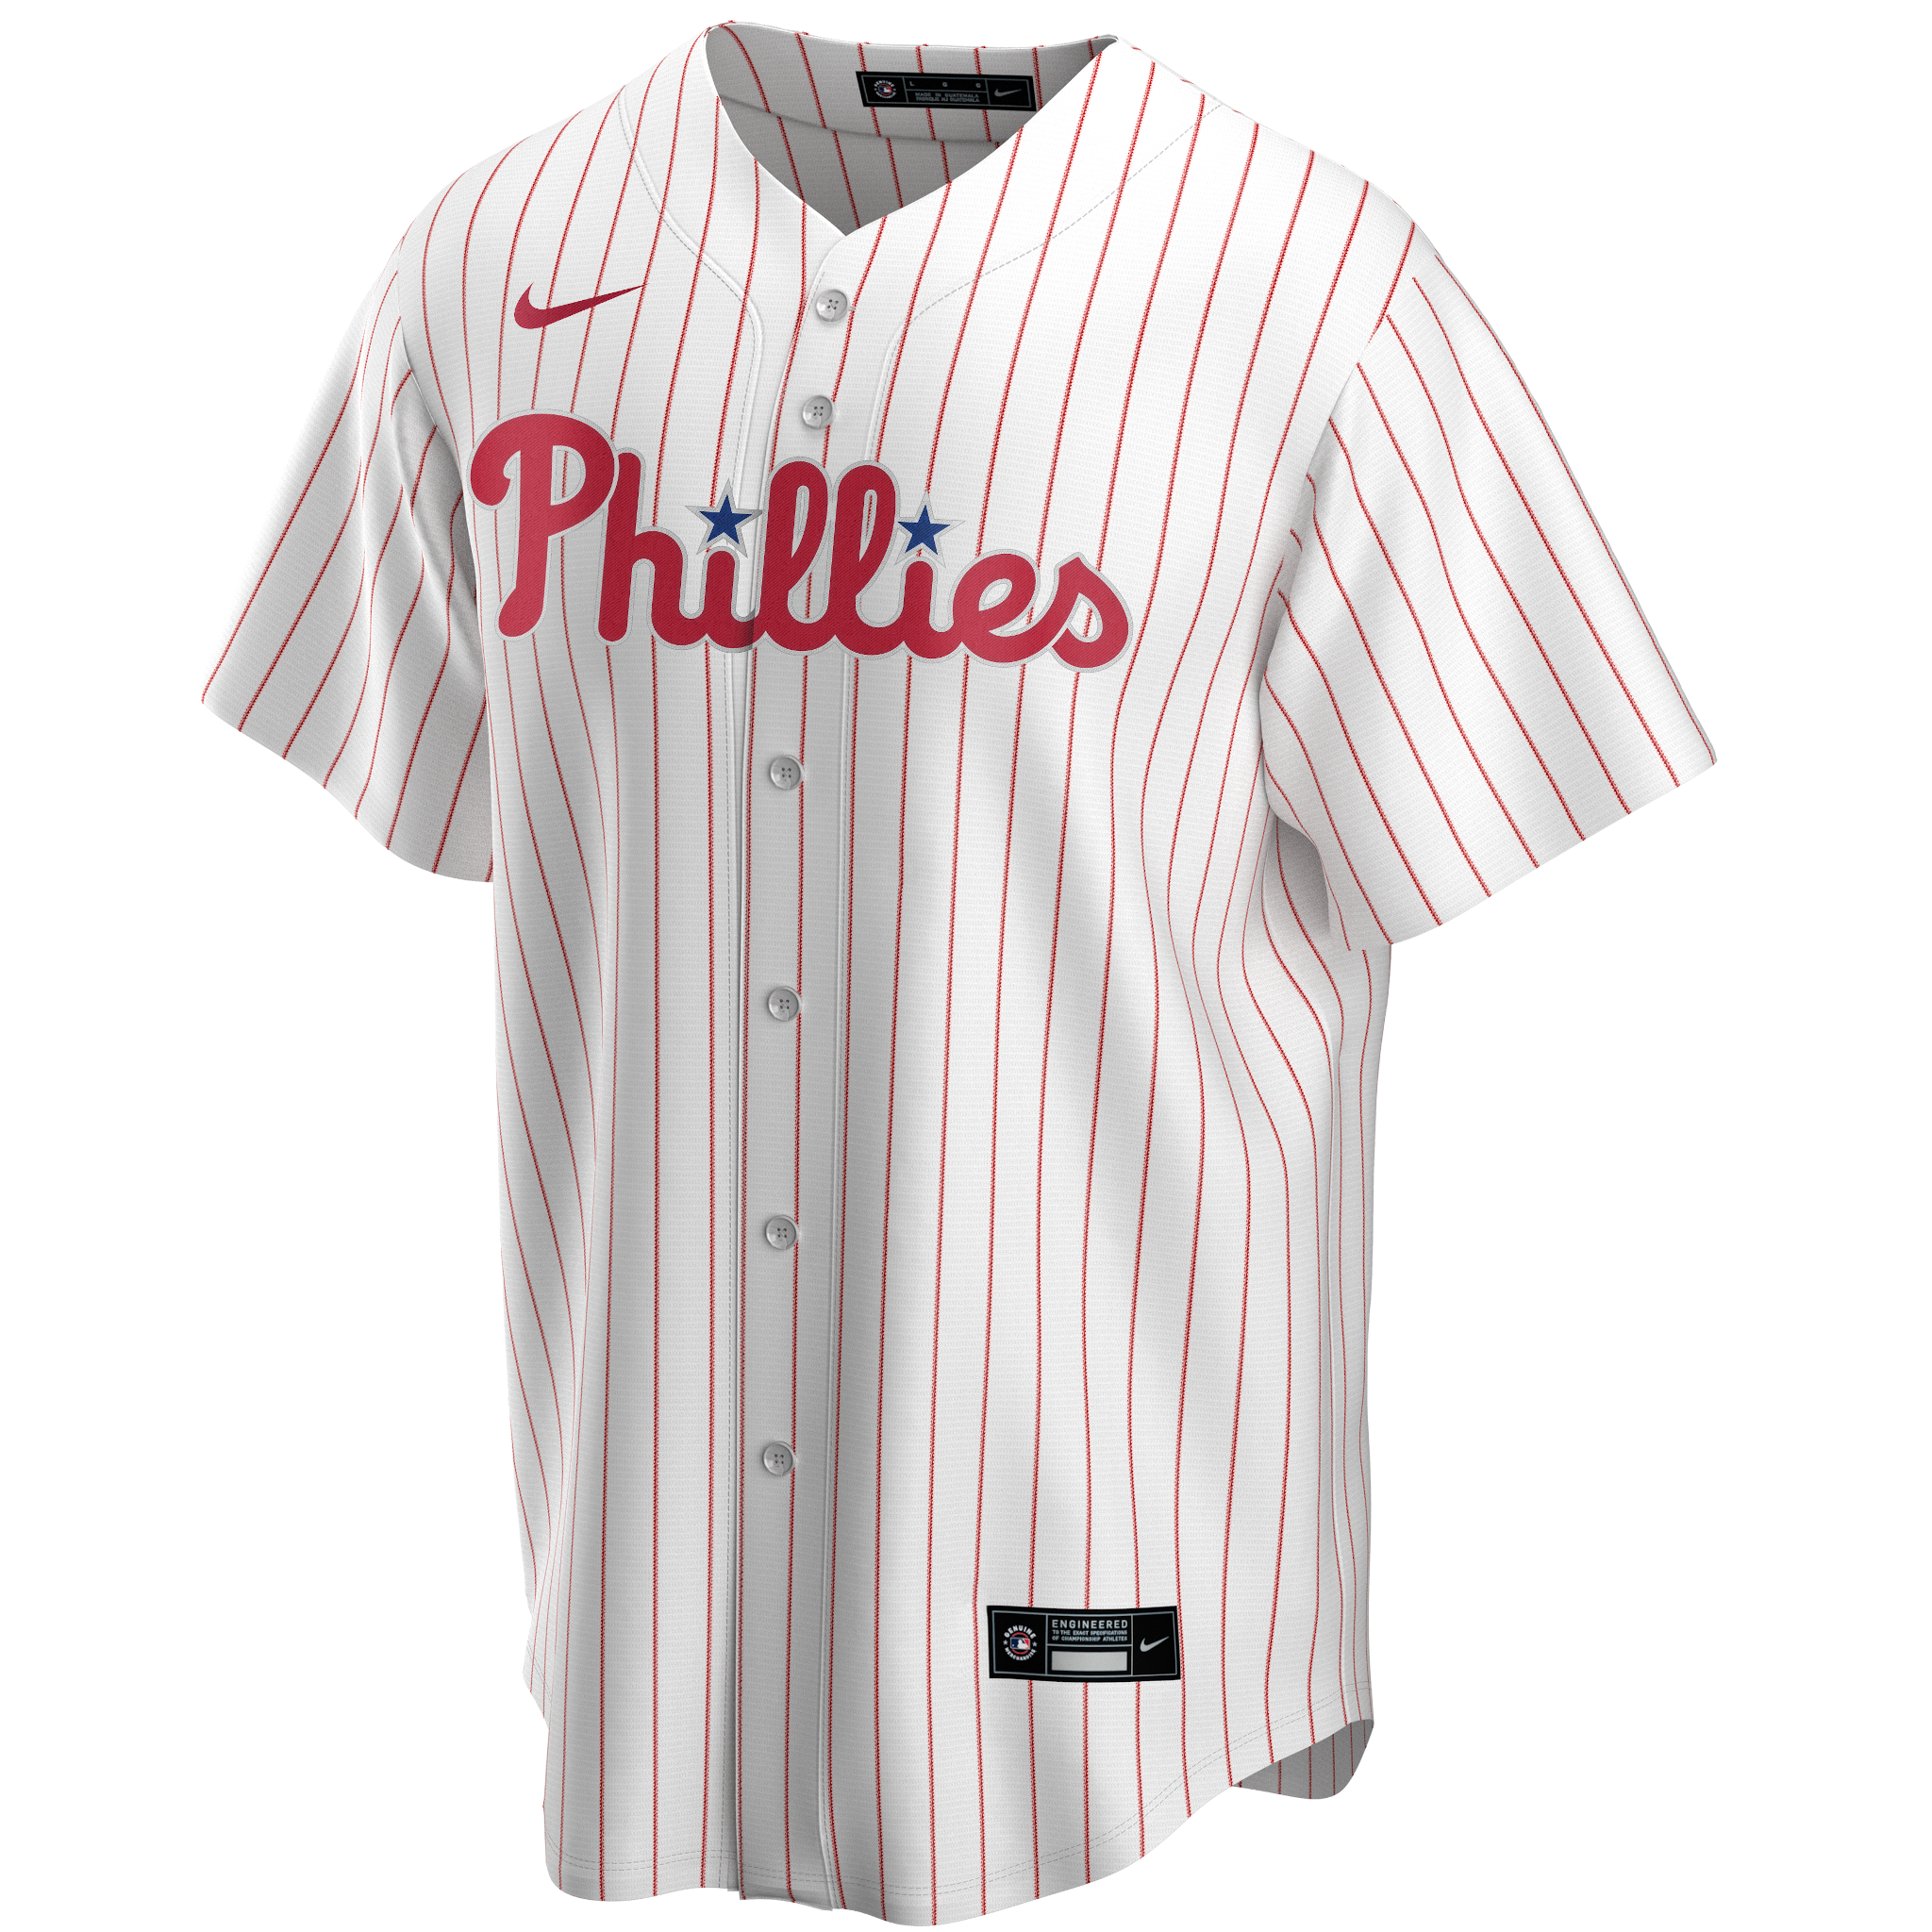 Cesar Hernandez Philadelphia Phillies Baseball Player Jersey — Ecustomily